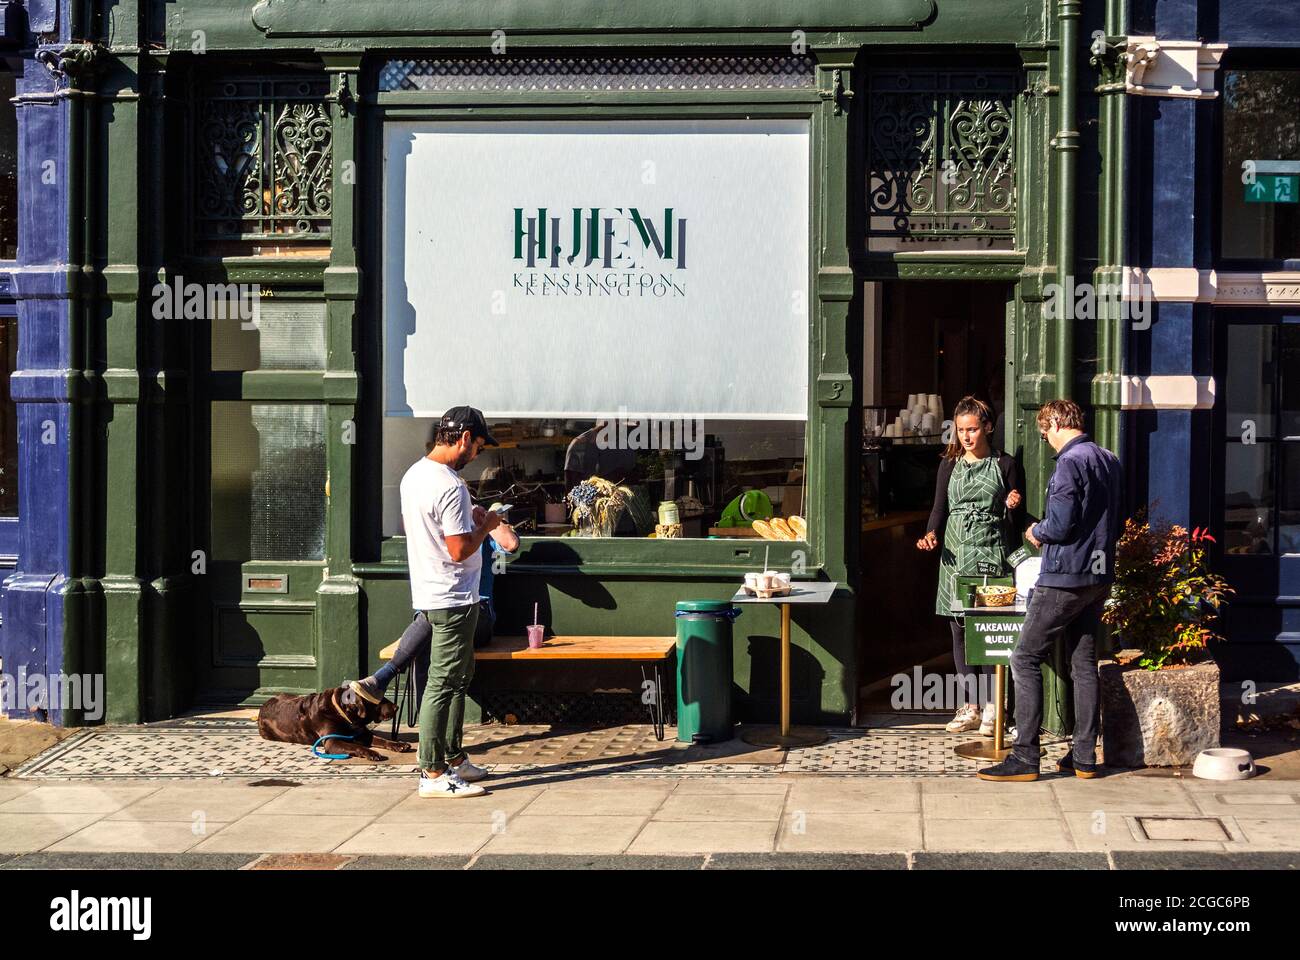 Hjem, Cafe and Takeaway, Launceston Place, Kensington, London Stock Photo